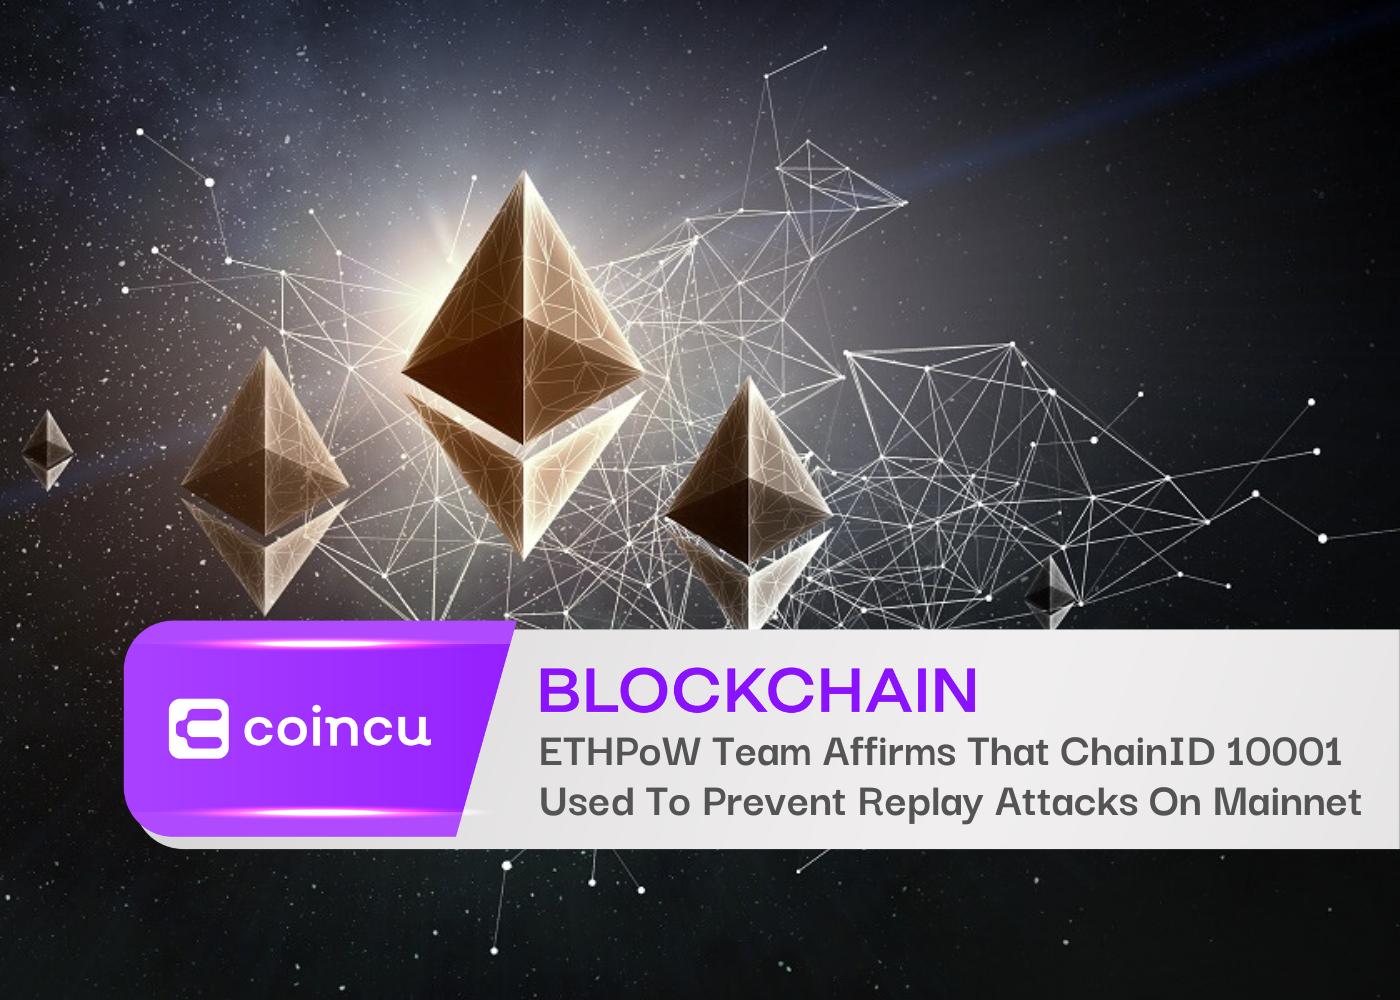 ETHPoW Team Affirms That ChainID 10001